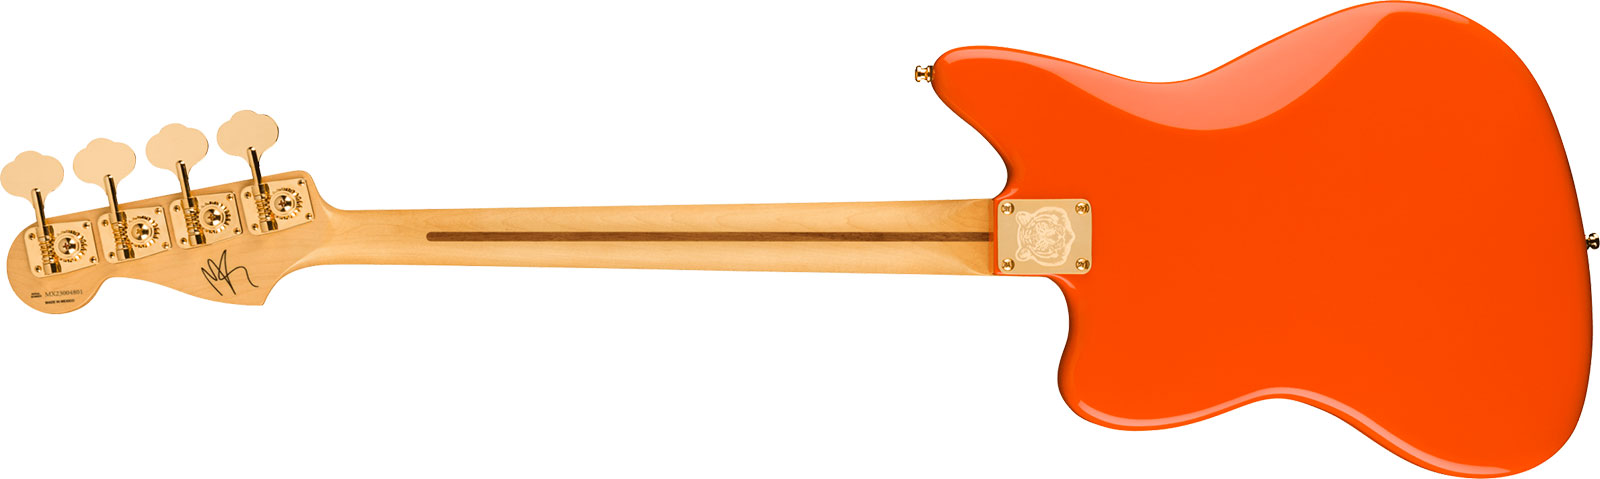 Fender Mike Kerr Jaguar Ltd Mex Signature Rw - Tiger's Blood Orange - Solidbody E-bass - Variation 1